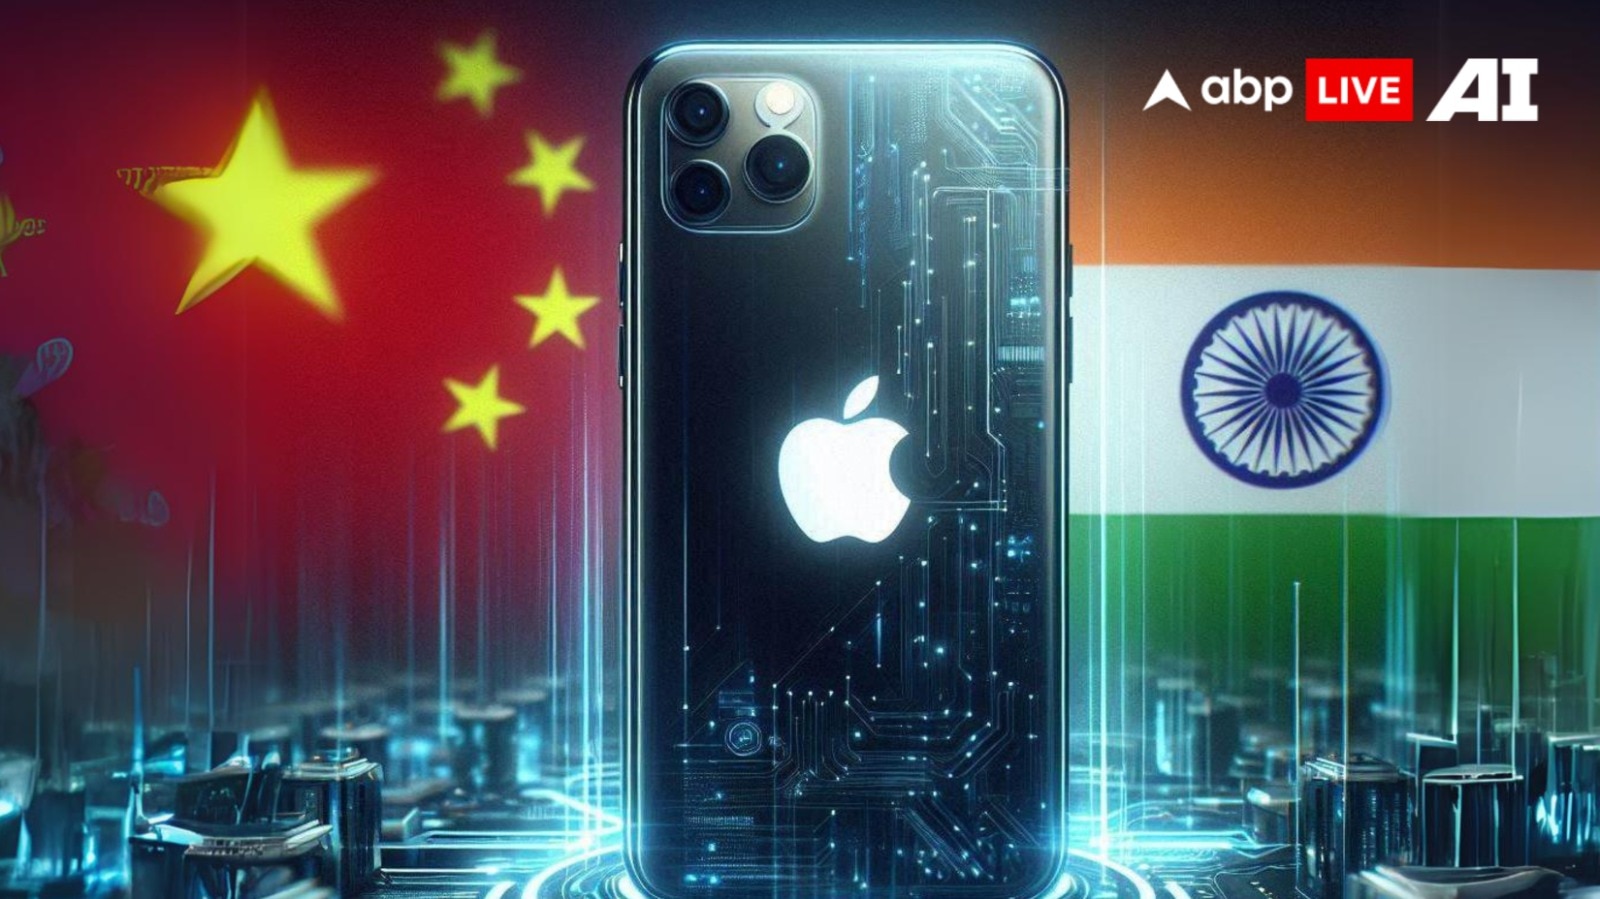 भारत ने ली चीन की जगह! iPhone भेजकर कमा लिए 12.1 अरब डॉलर, एक्सपोर्ट हुआ दोगुना